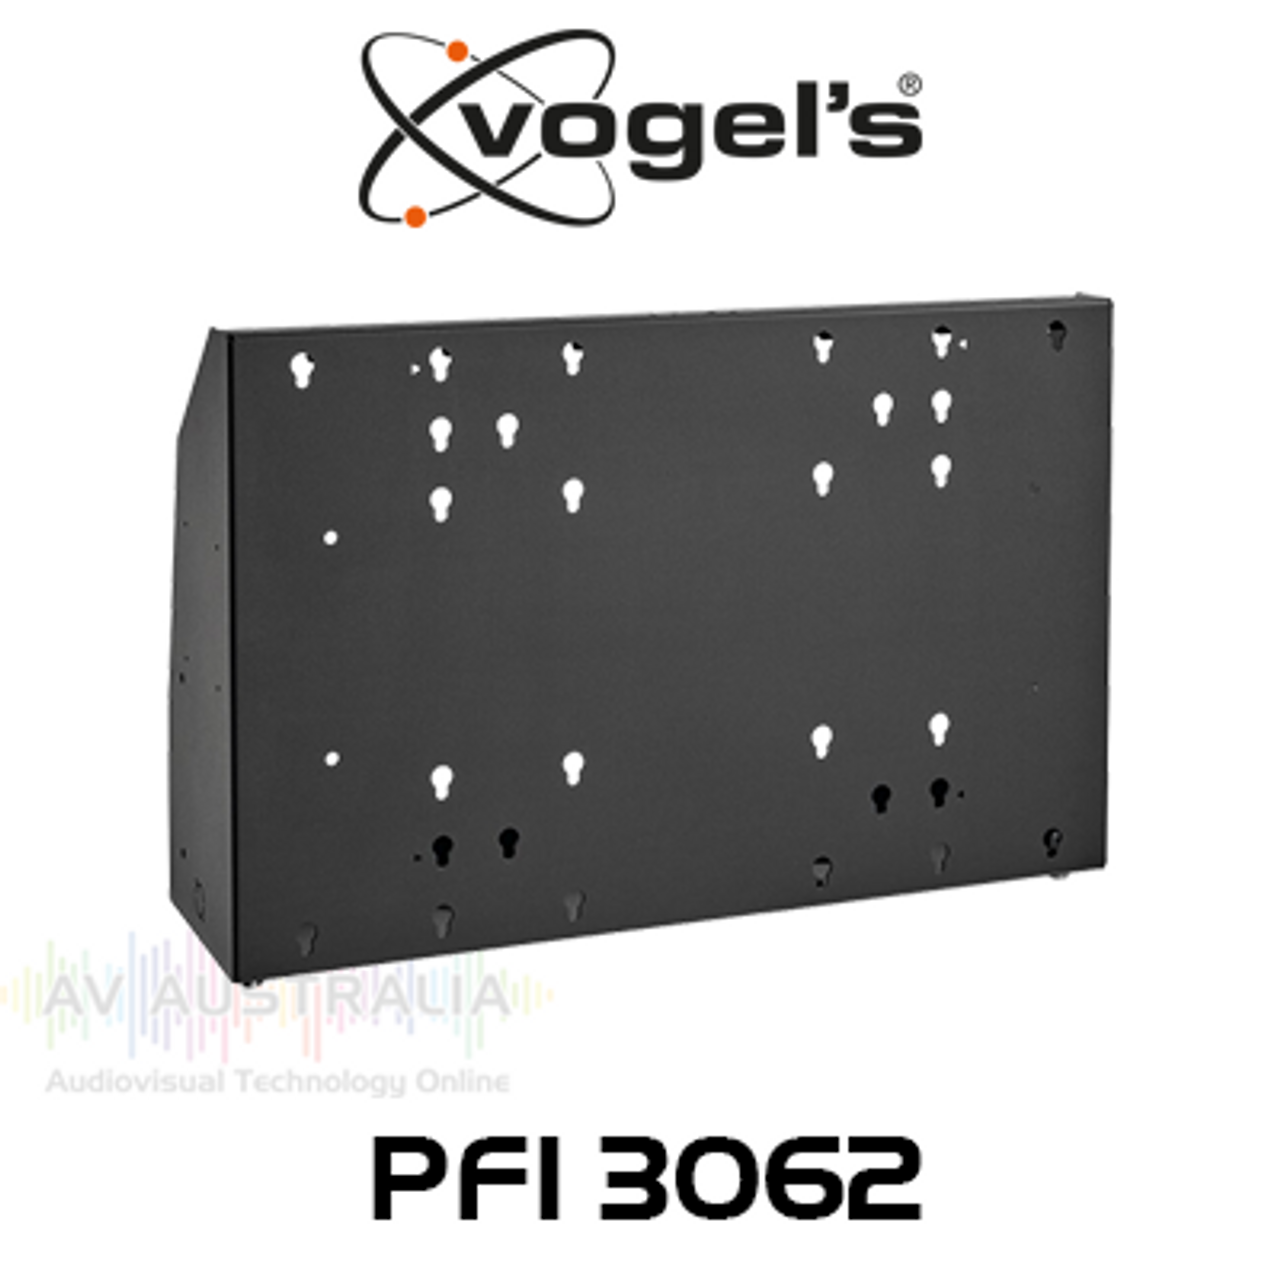 Vogels PFI3062 Interface Box For PFFE7109